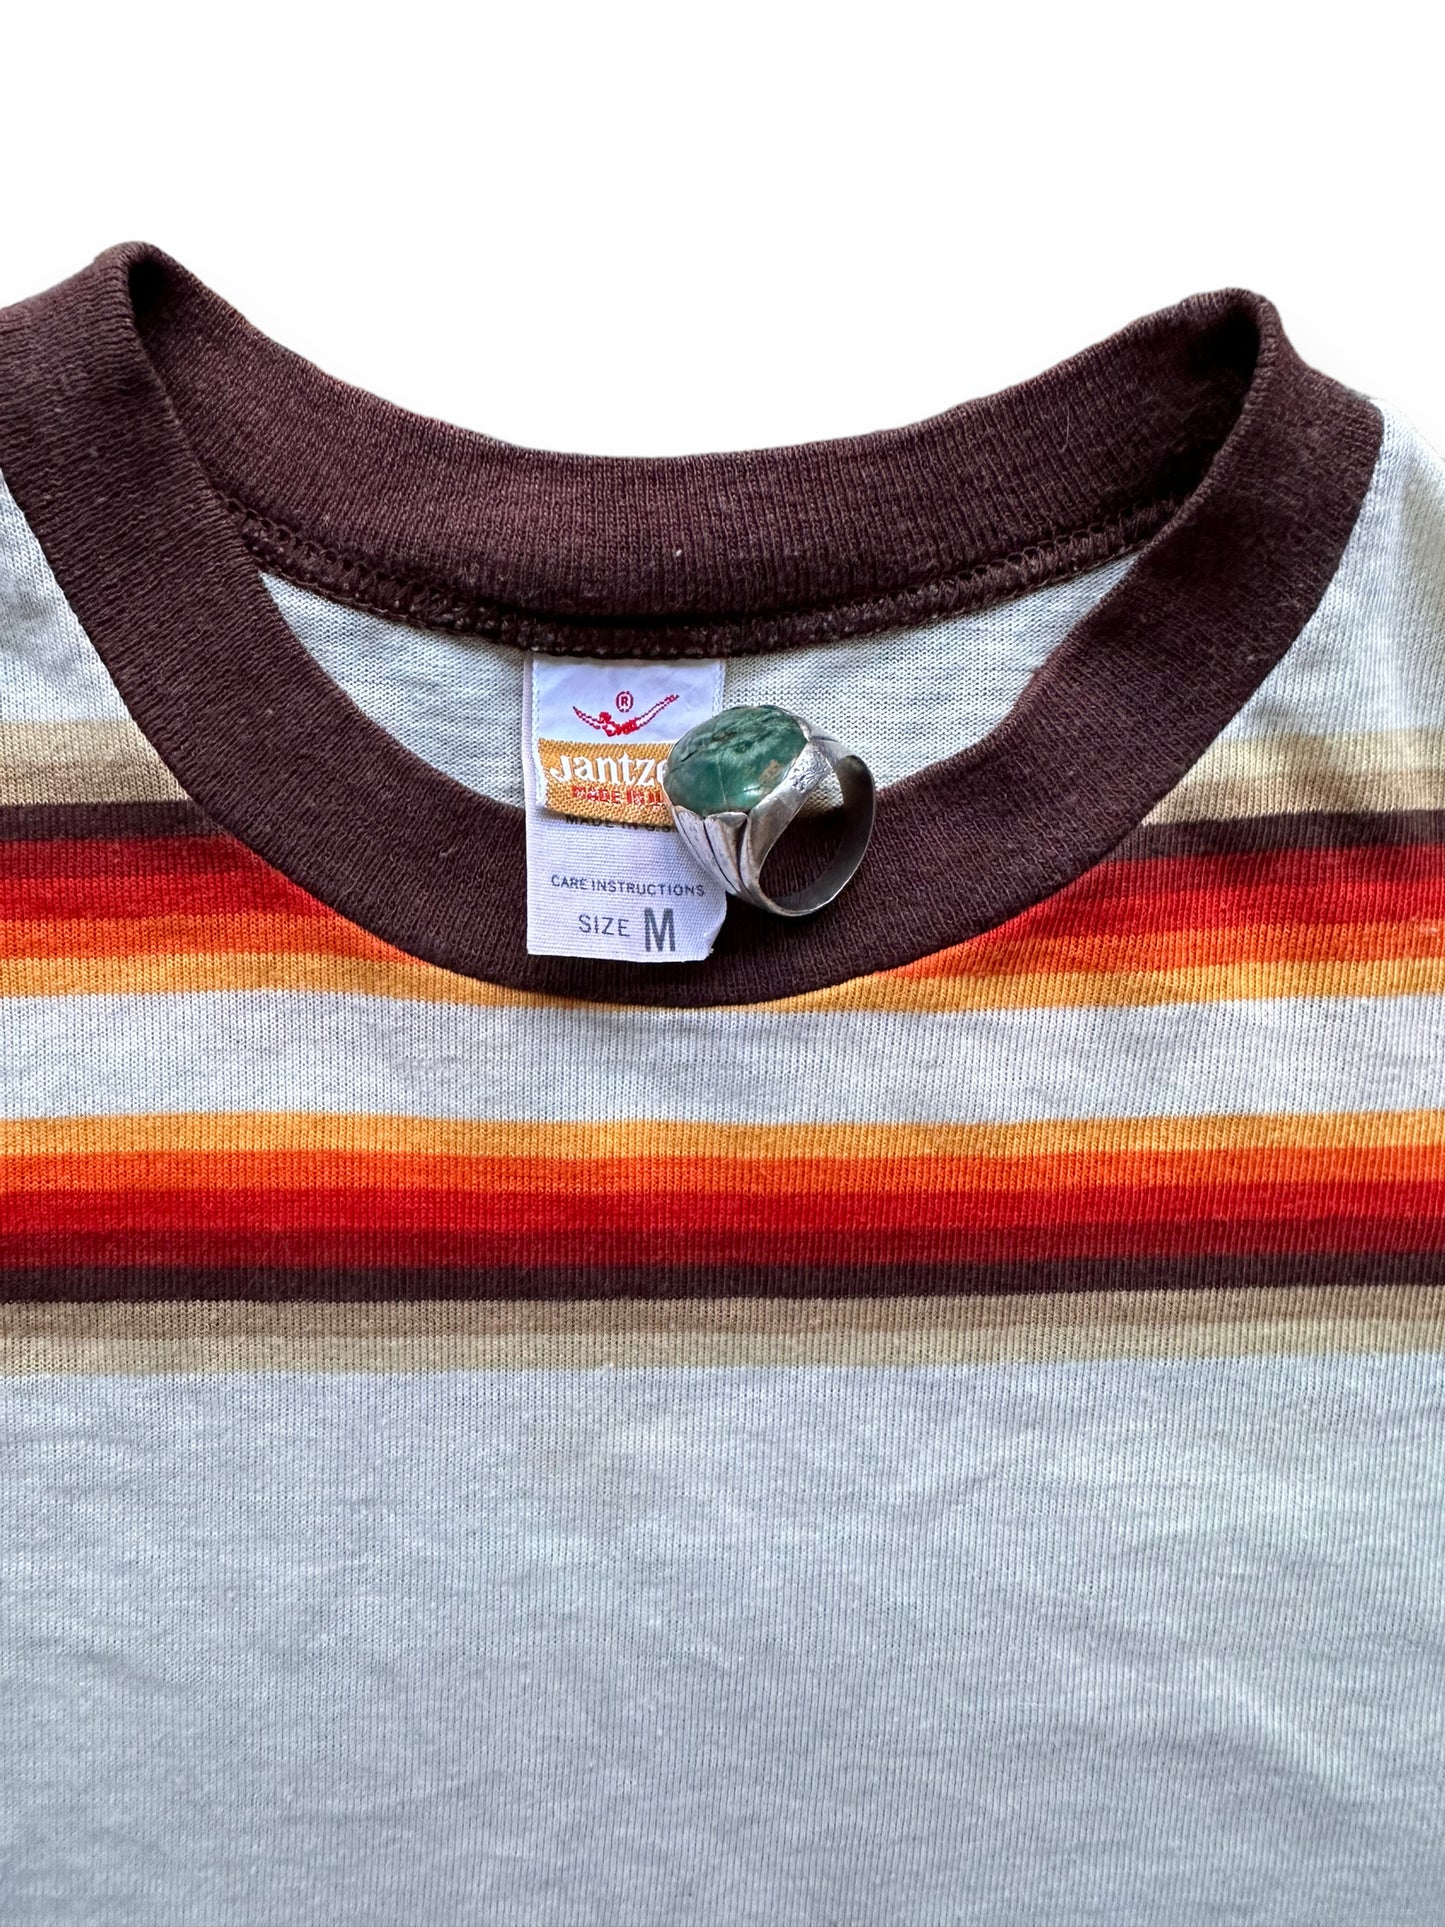 Tag View of Vintage Jantzen Striped Shirt SZ M | Vintage Striped Shirt Seattle | Barn Owl Vintage Seattle